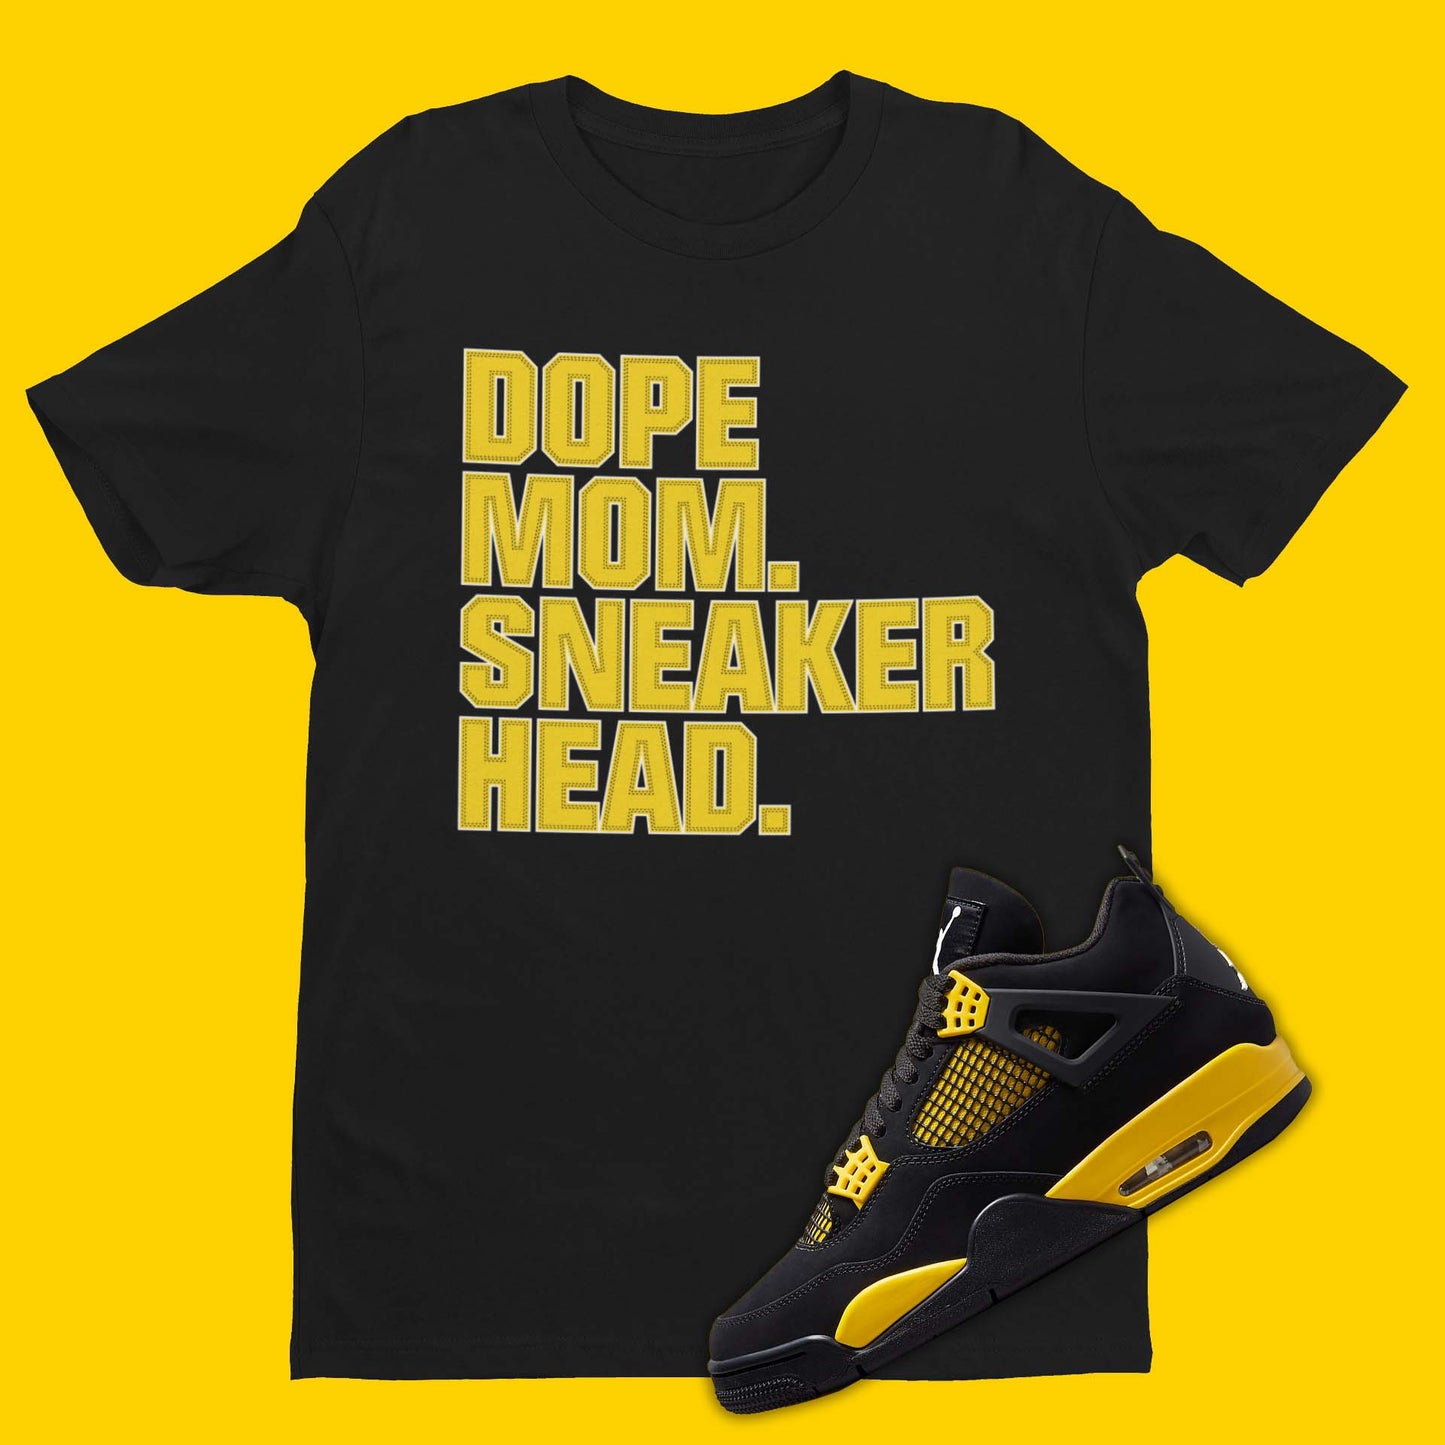 Black crew neck black t-shirt with 'Dope Mom Sneakerhead' design inspired by Air Jordan 4 Thunder sneakers.